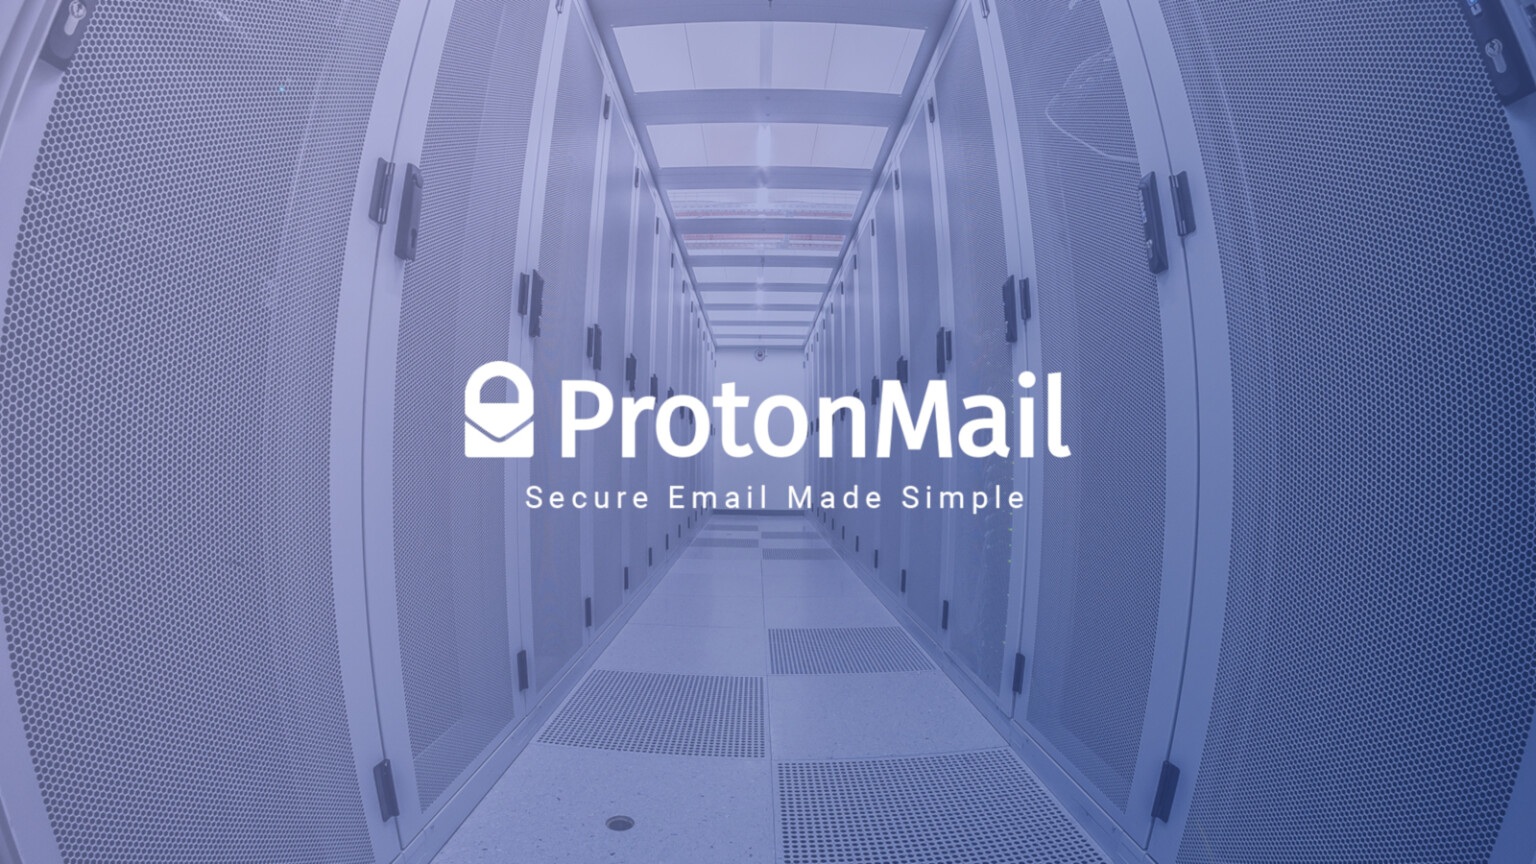 proton mail